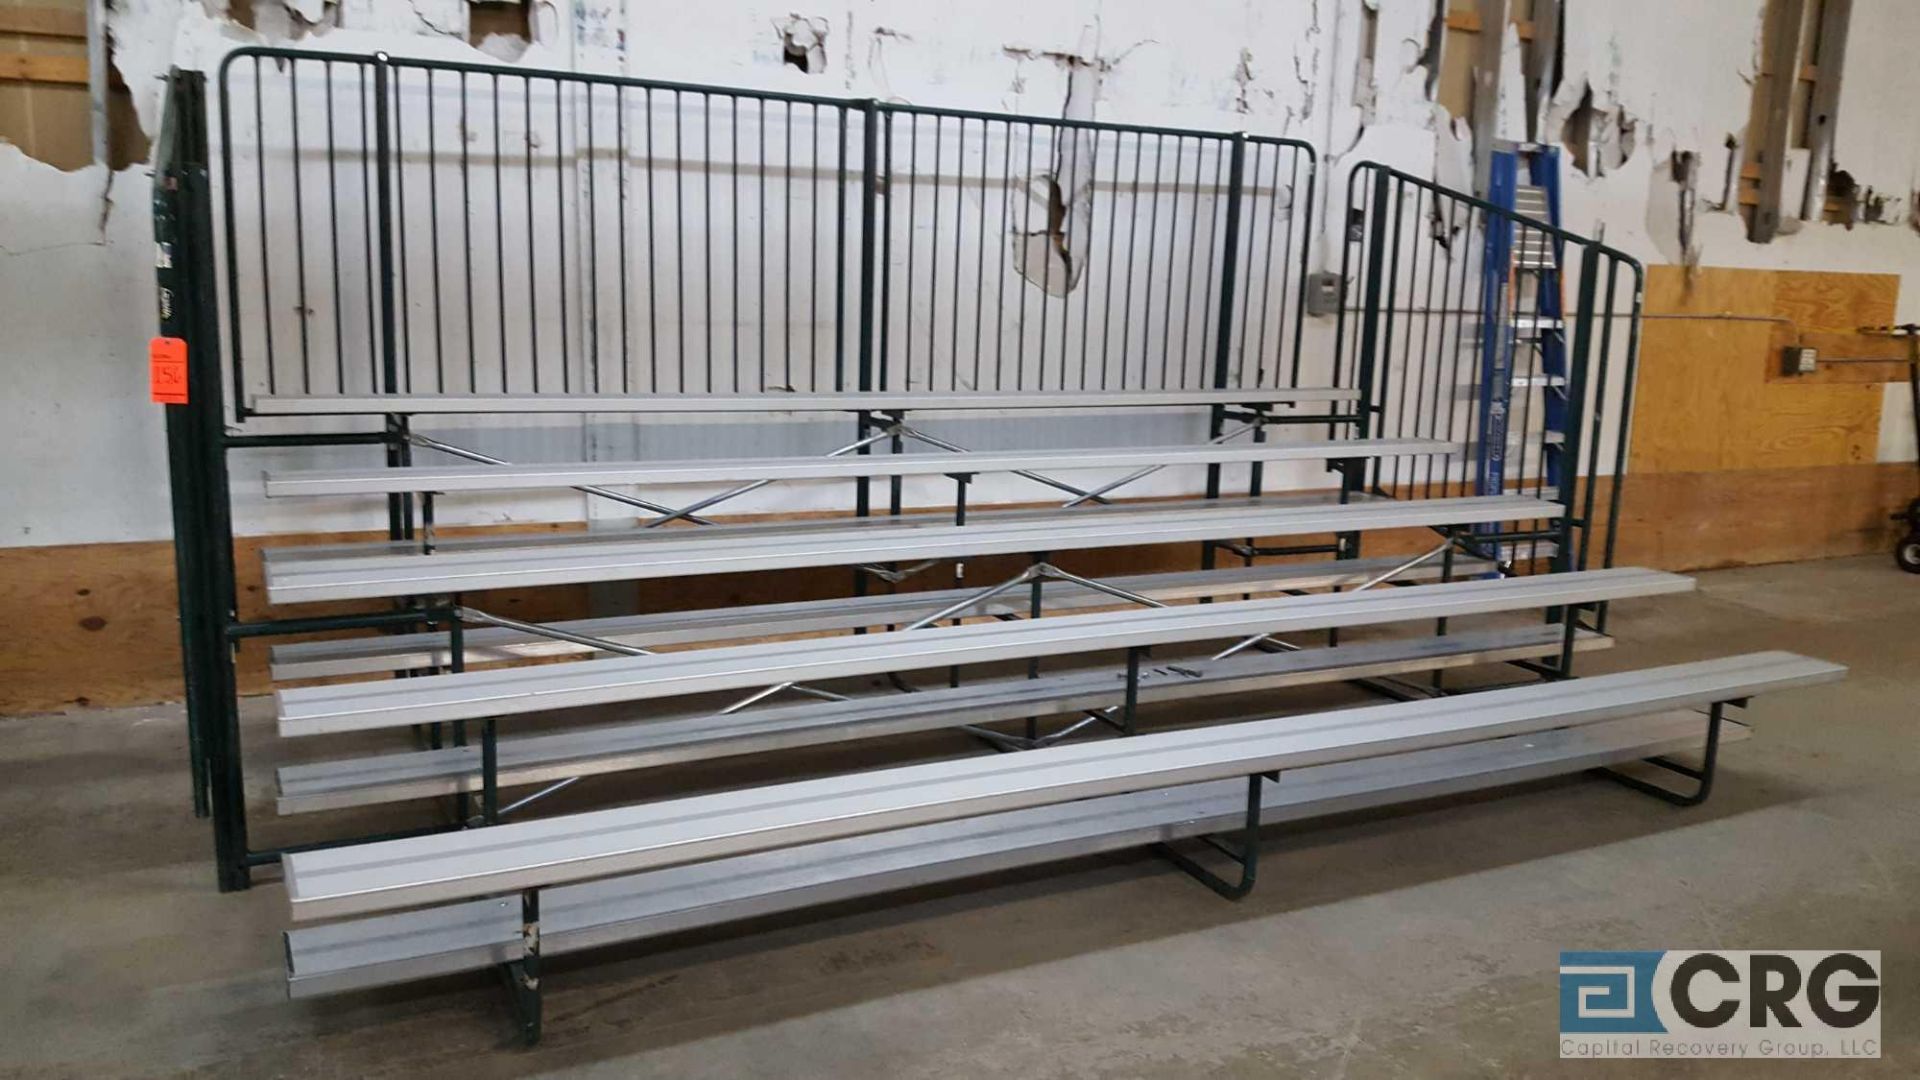 Granite Industries bleacher grandstand set, 15' long, with (5) aluminum benches, (4) aluminum foot